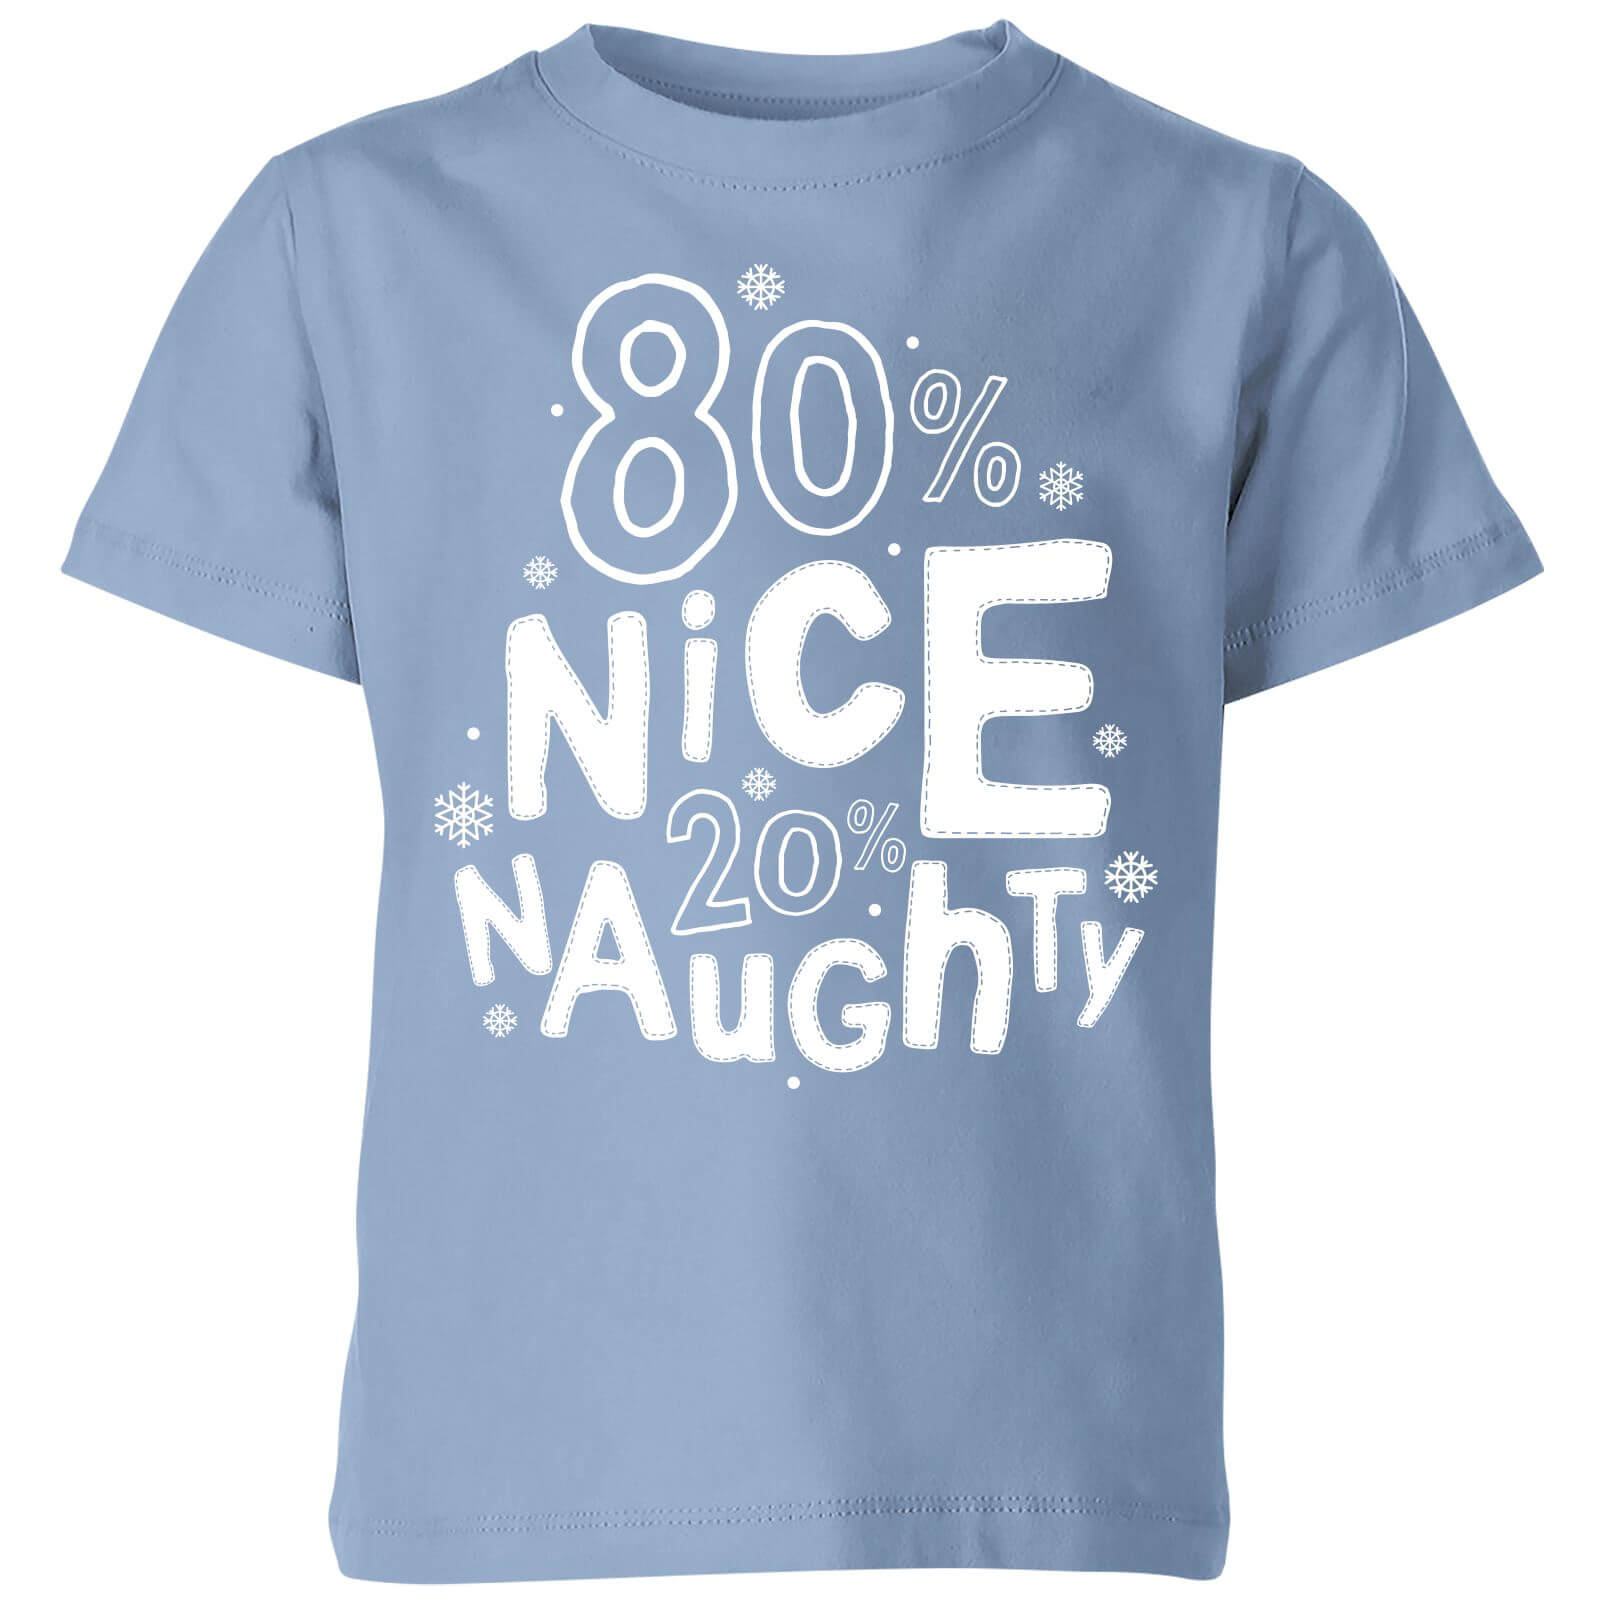 80% Nice 20% Naughty Kids' T-Shirt - Sky Blue - 3-4 Years - Sky blue